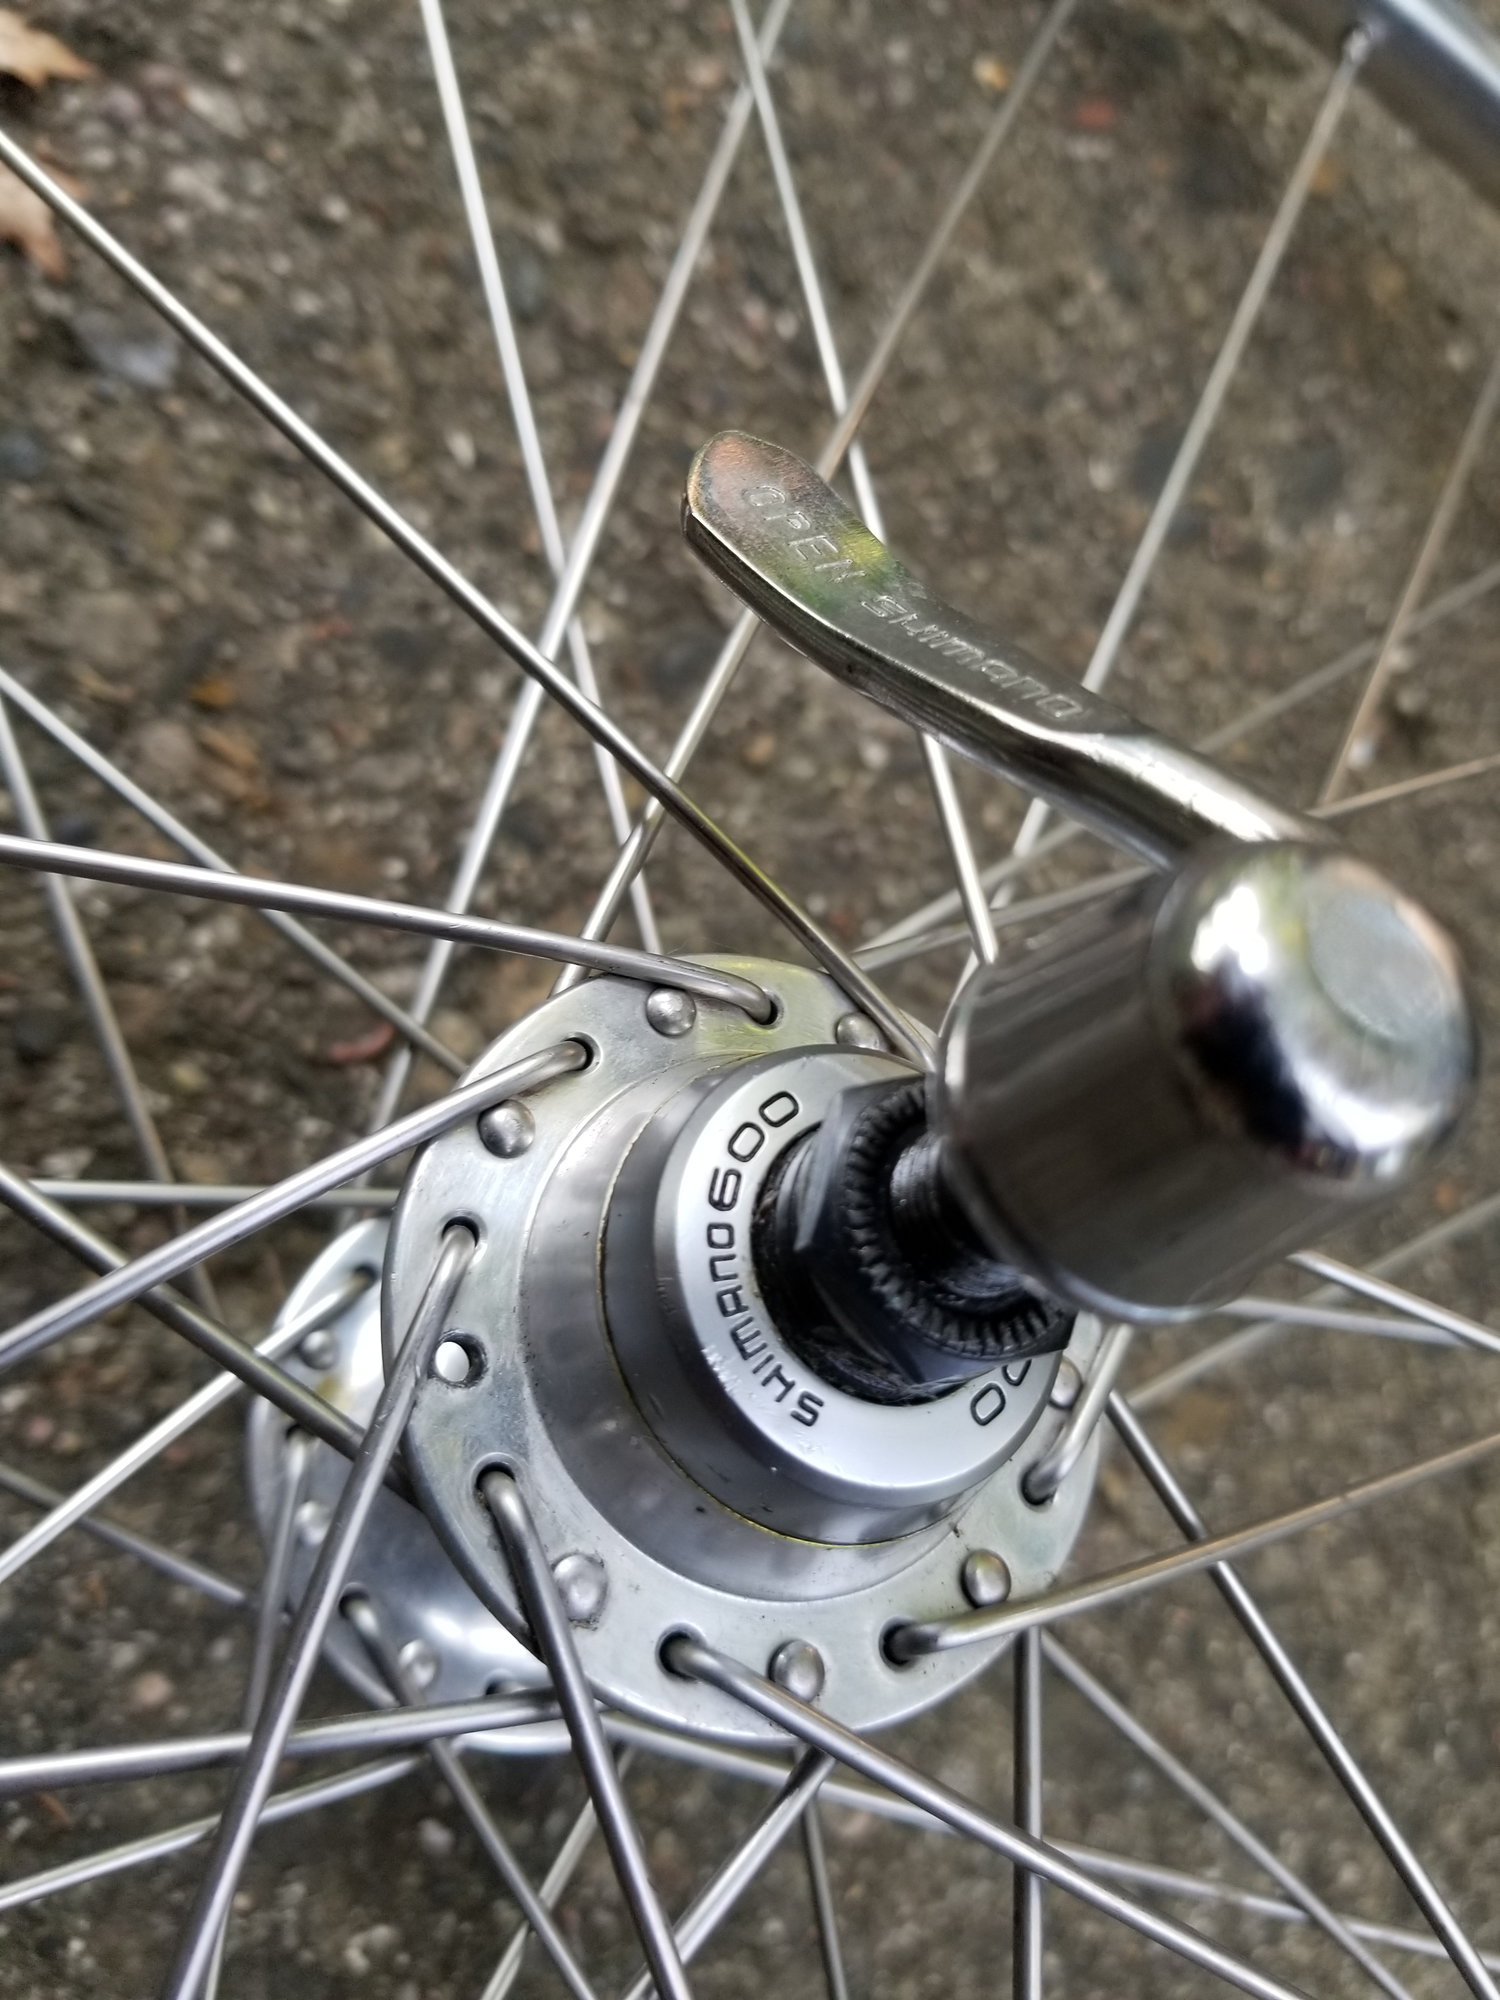 replacing bicycle spokes